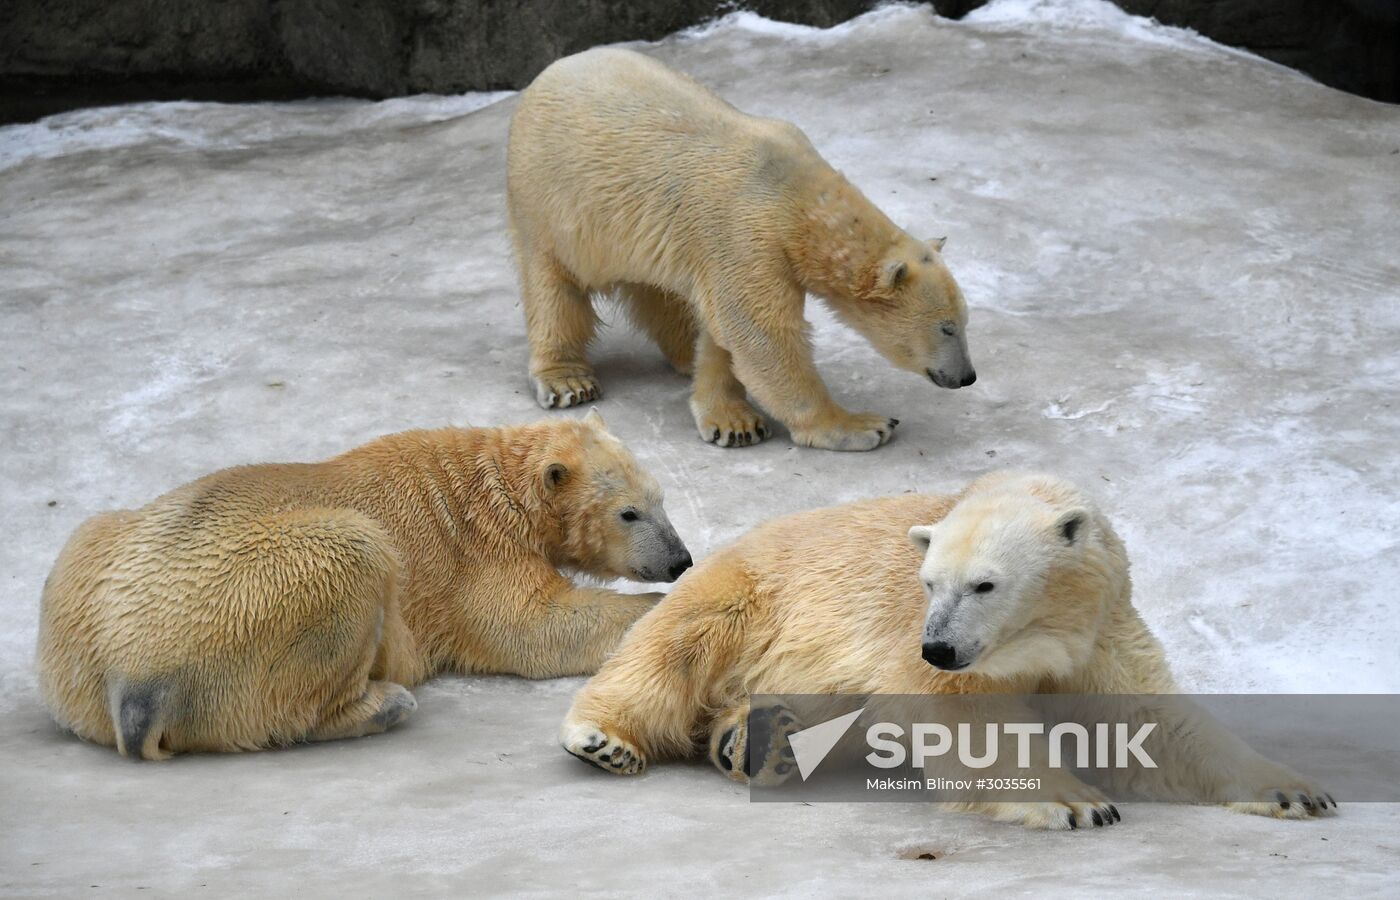 Polar bears in Moscow Zoo